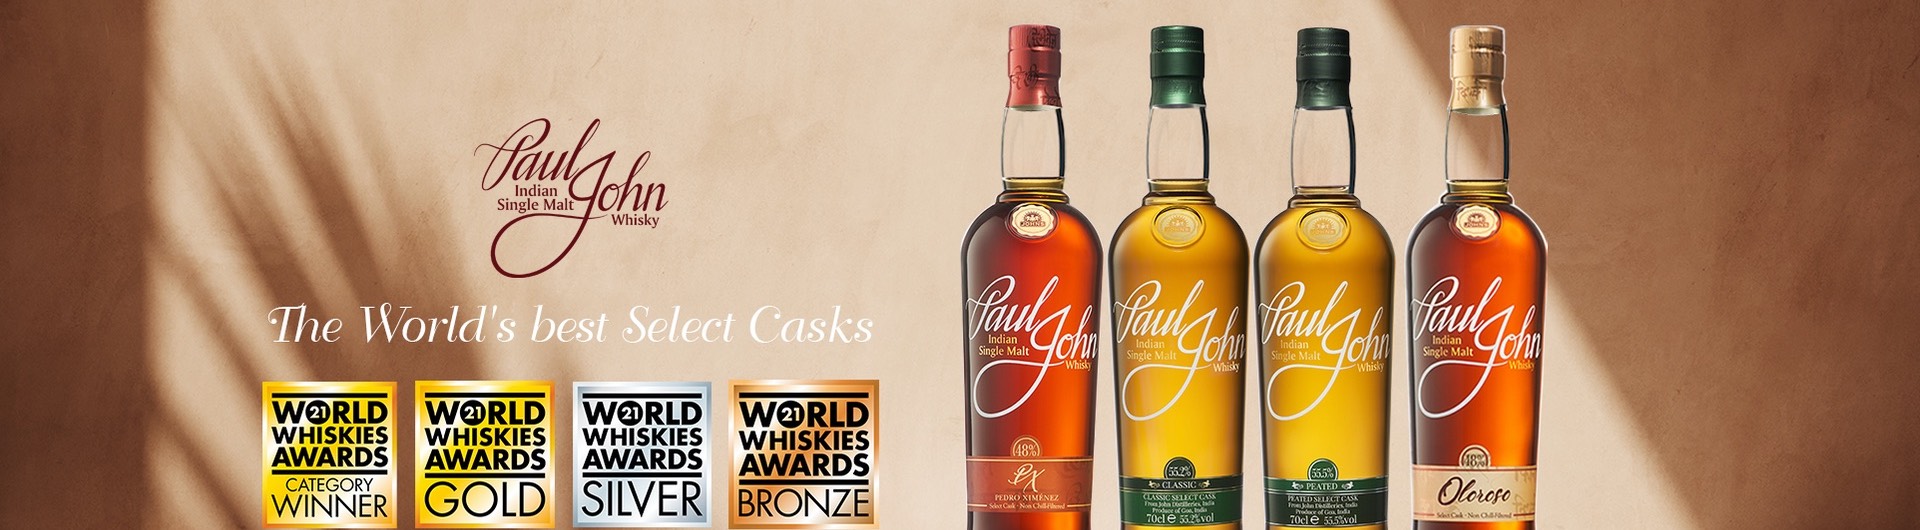 Paul John Single Malt Whisky - Prestigious Awards